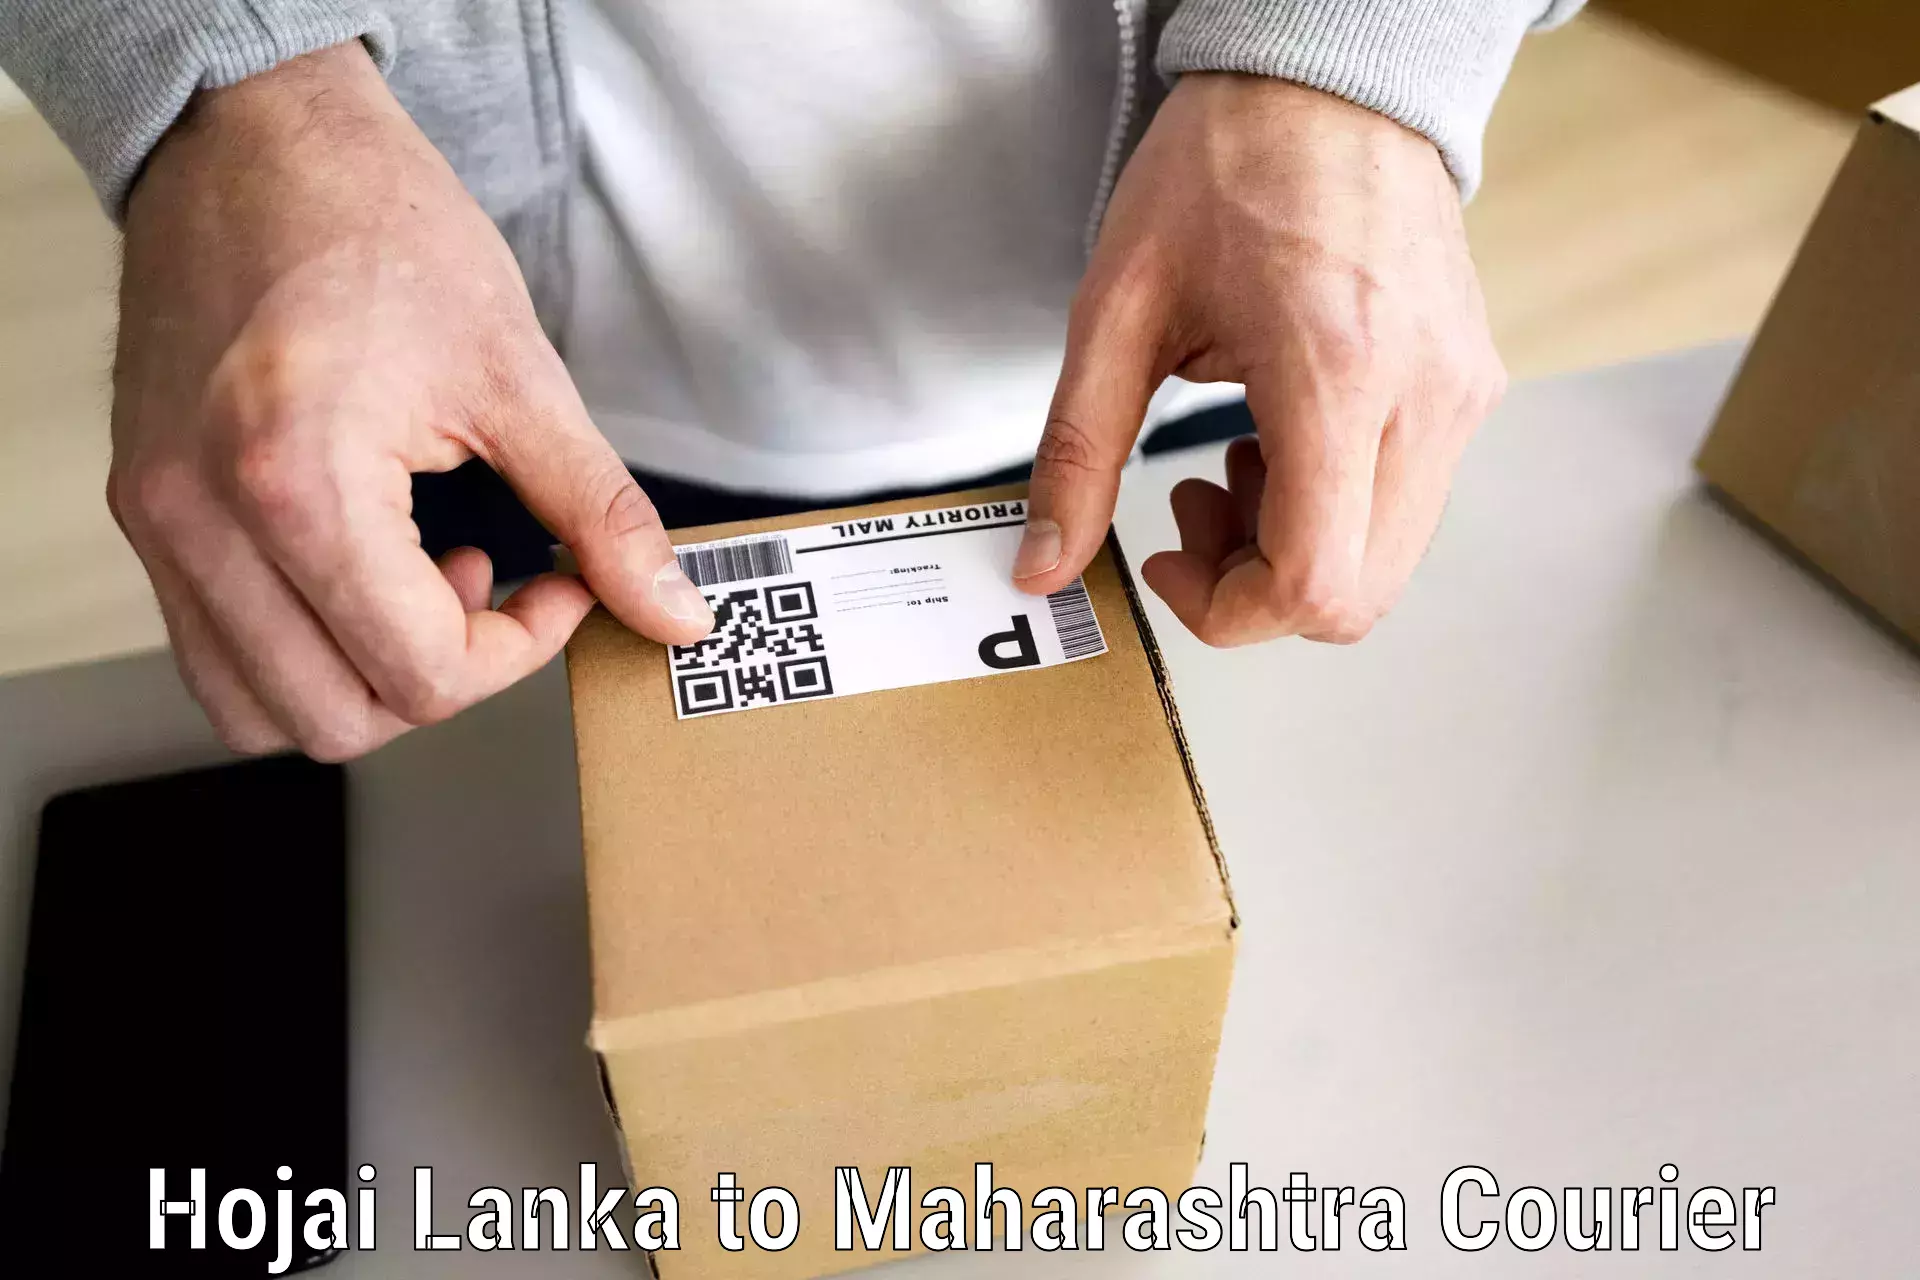 Efficient moving company Hojai Lanka to Ahmednagar